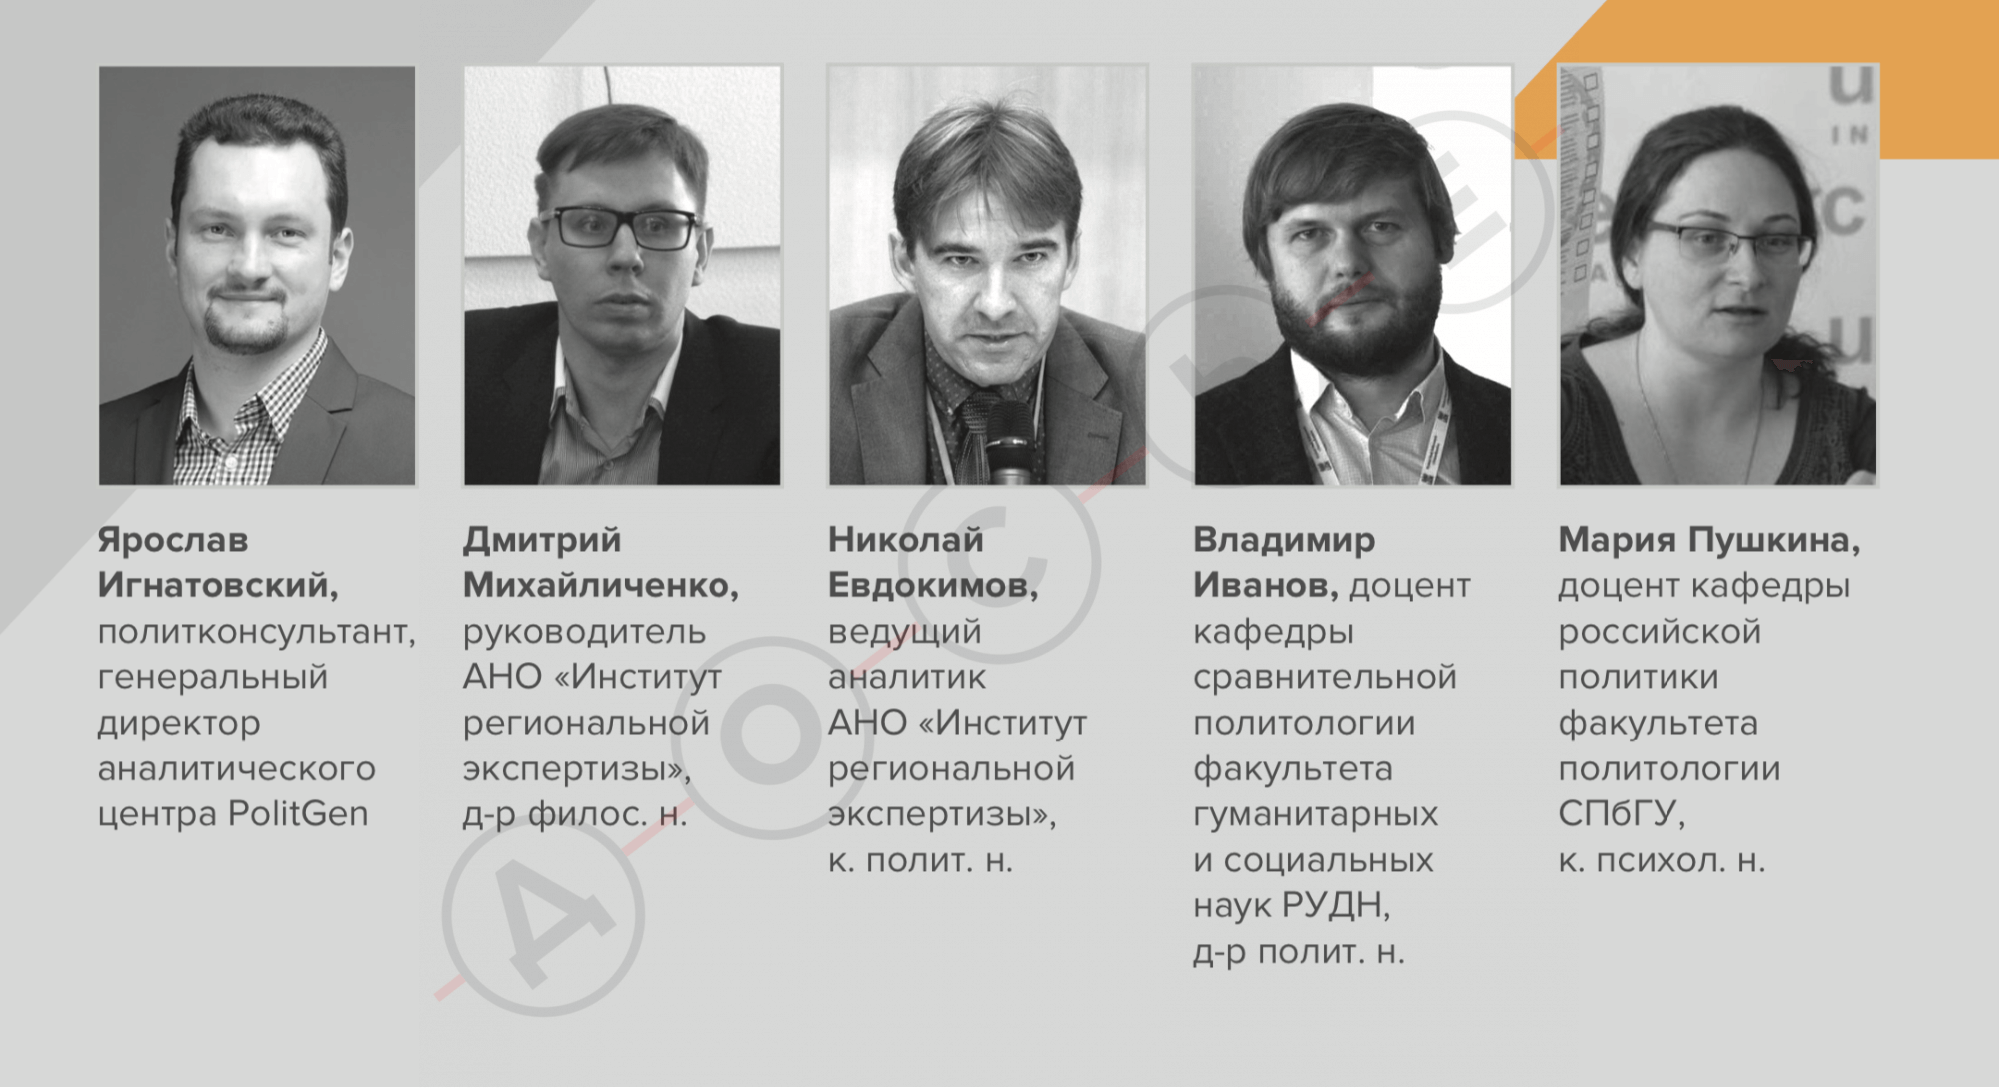 Политологи России Фамилии И Фото Мужчины